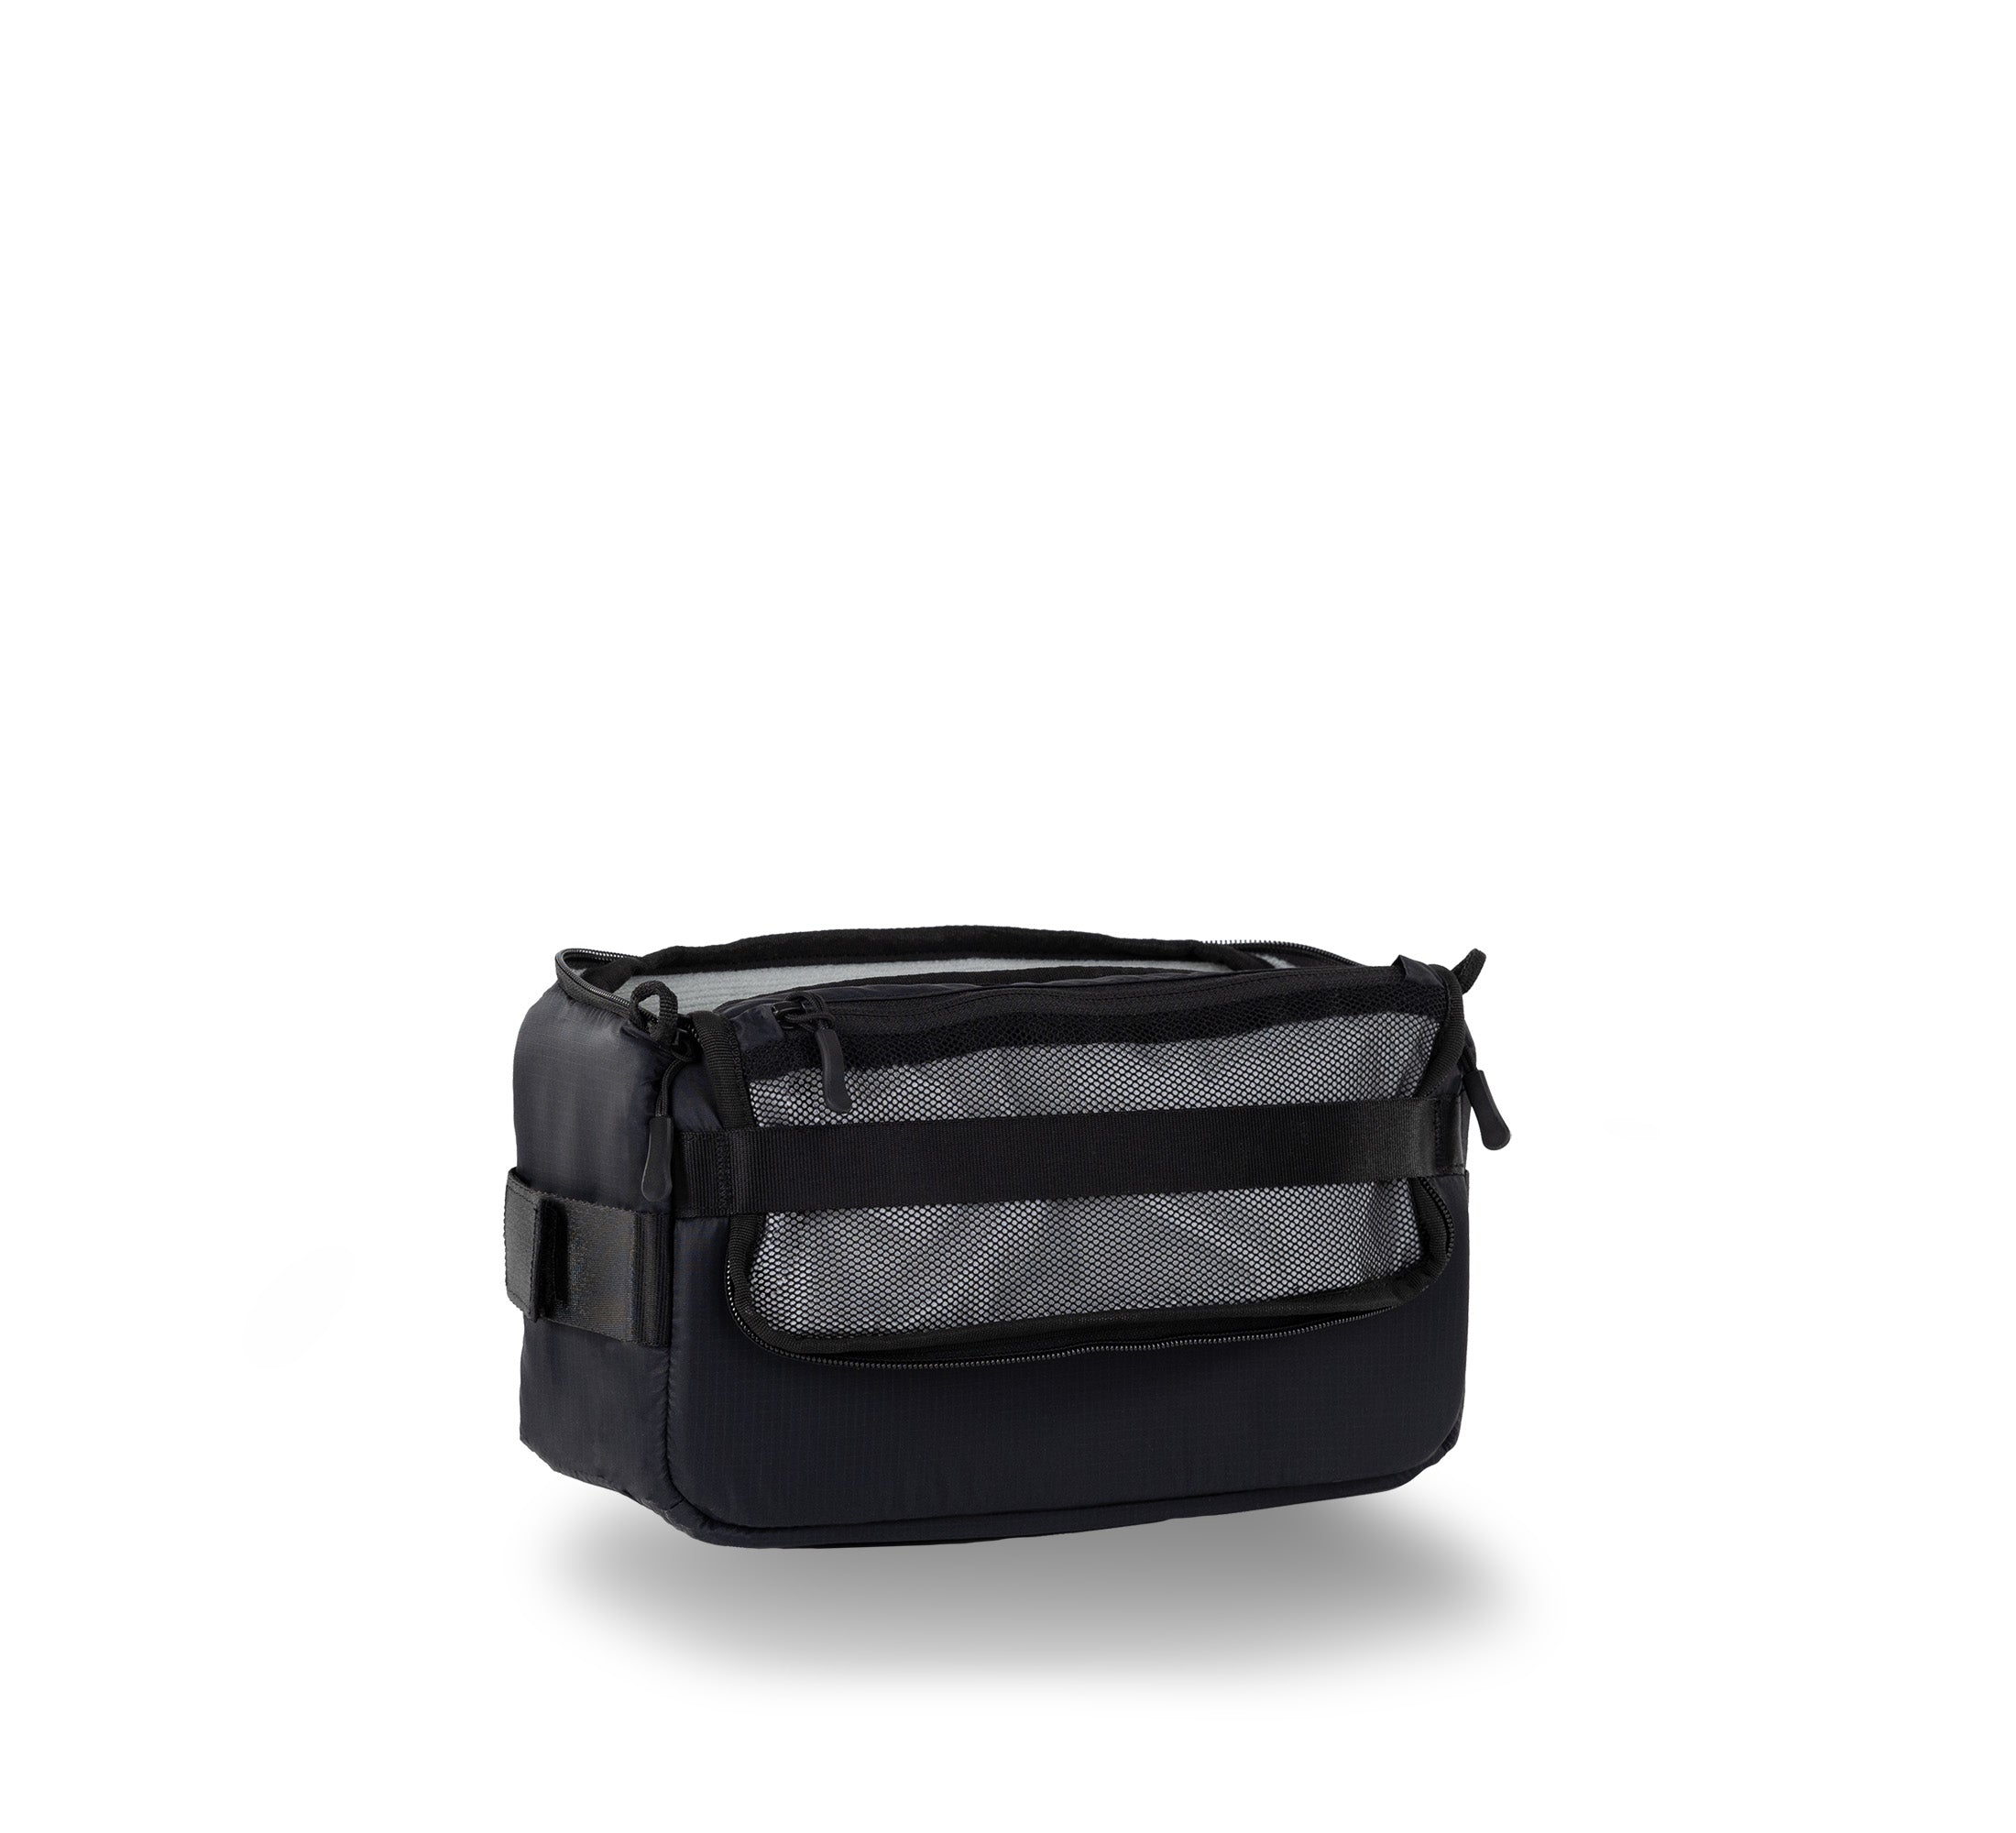 Adapt backpack 25L - Komplett-Set